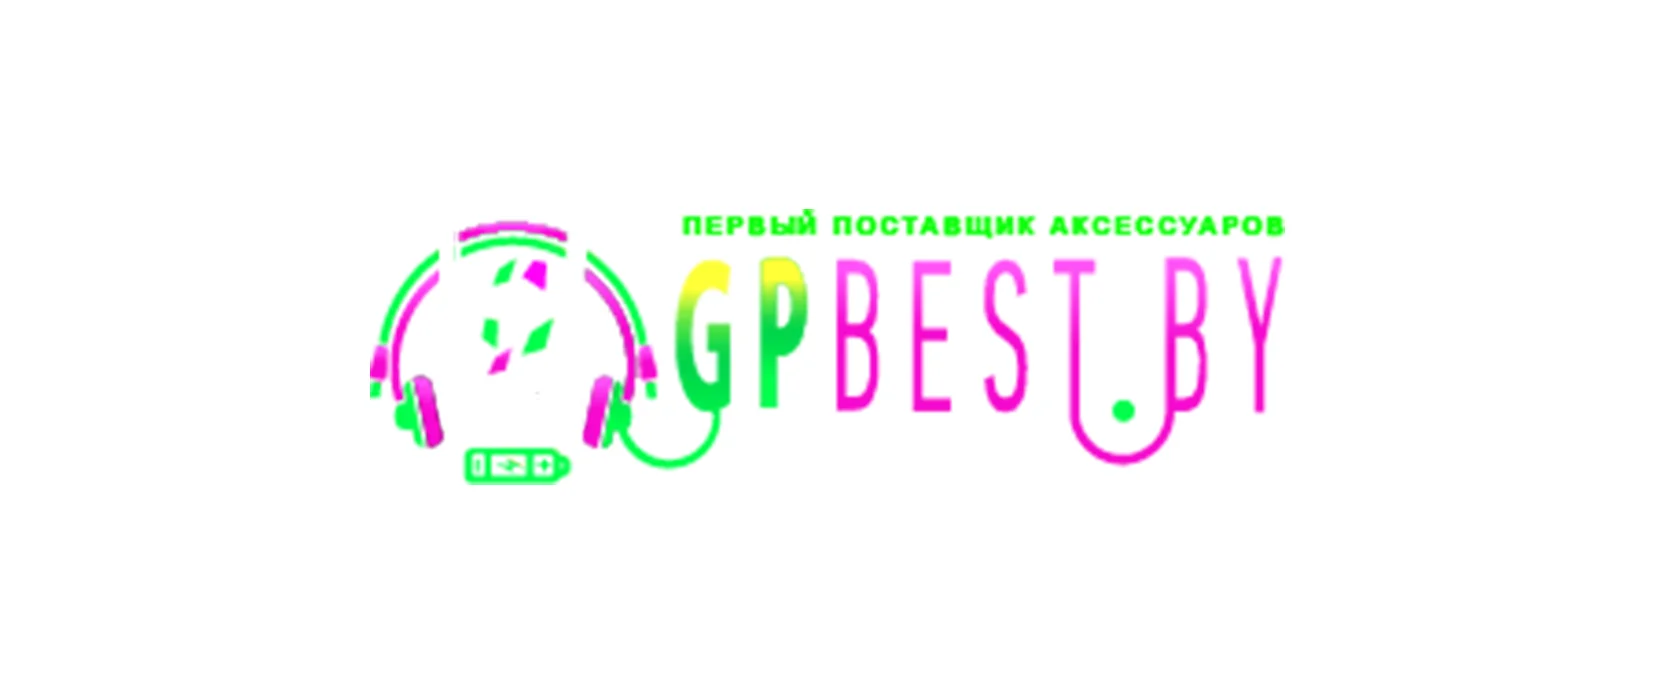 gpbest.by - интернет-магазин аксессуаров